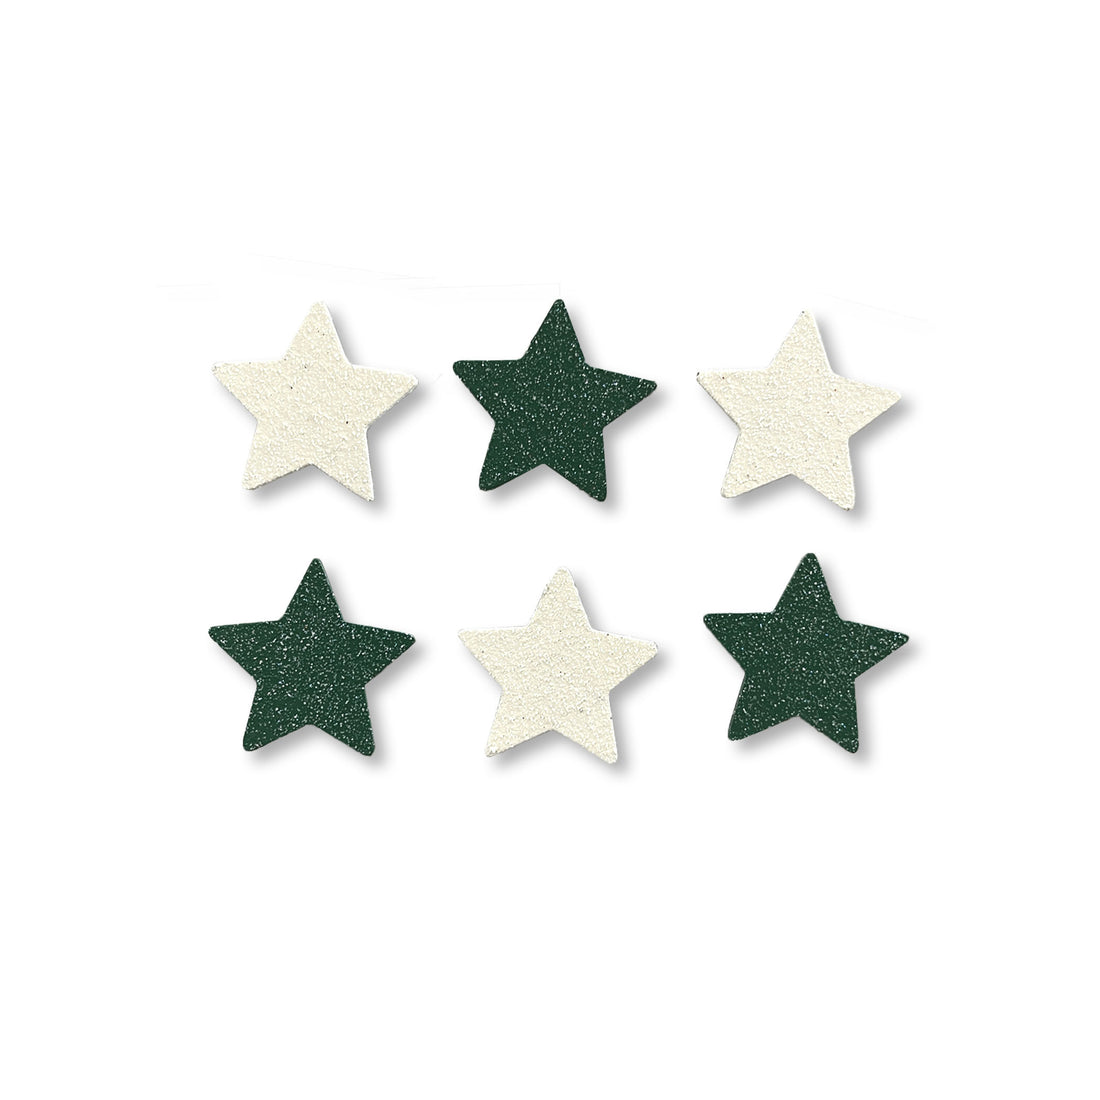 Collegiate Star Magnets S/6 Green/White